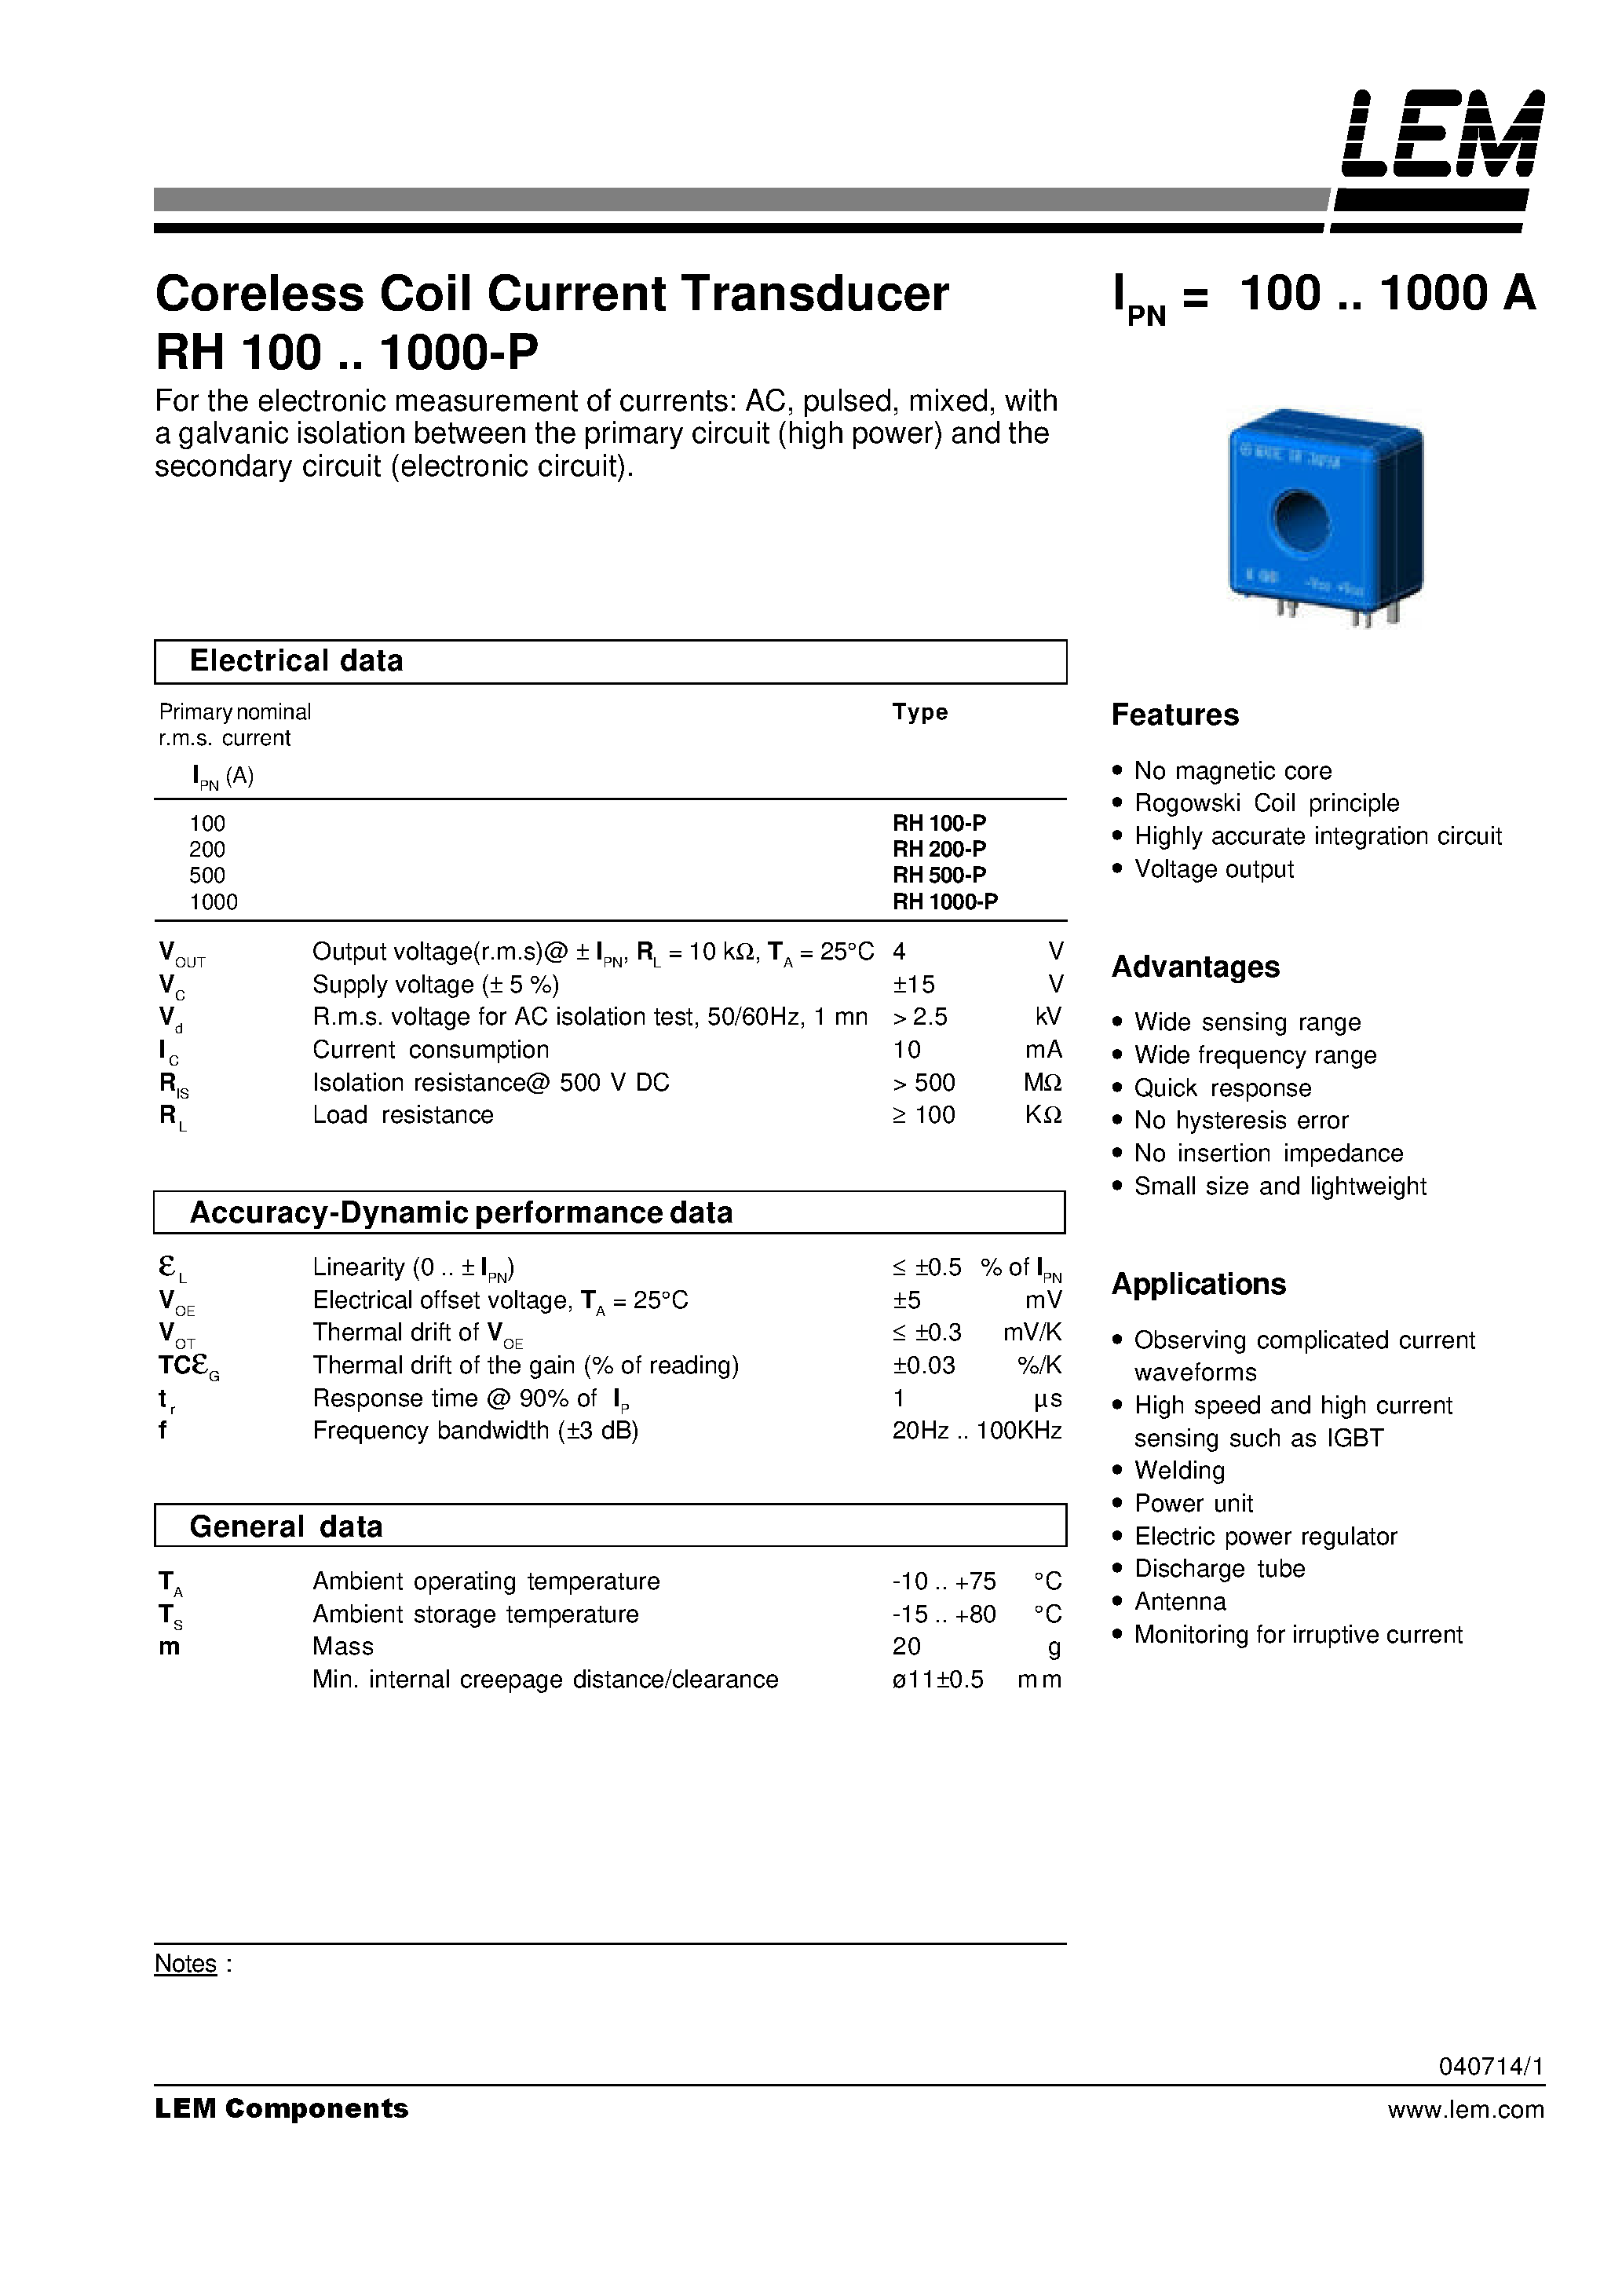 Datasheet RH100-P - Coreless Coil Current Transducer RH 100~1000-P page 1